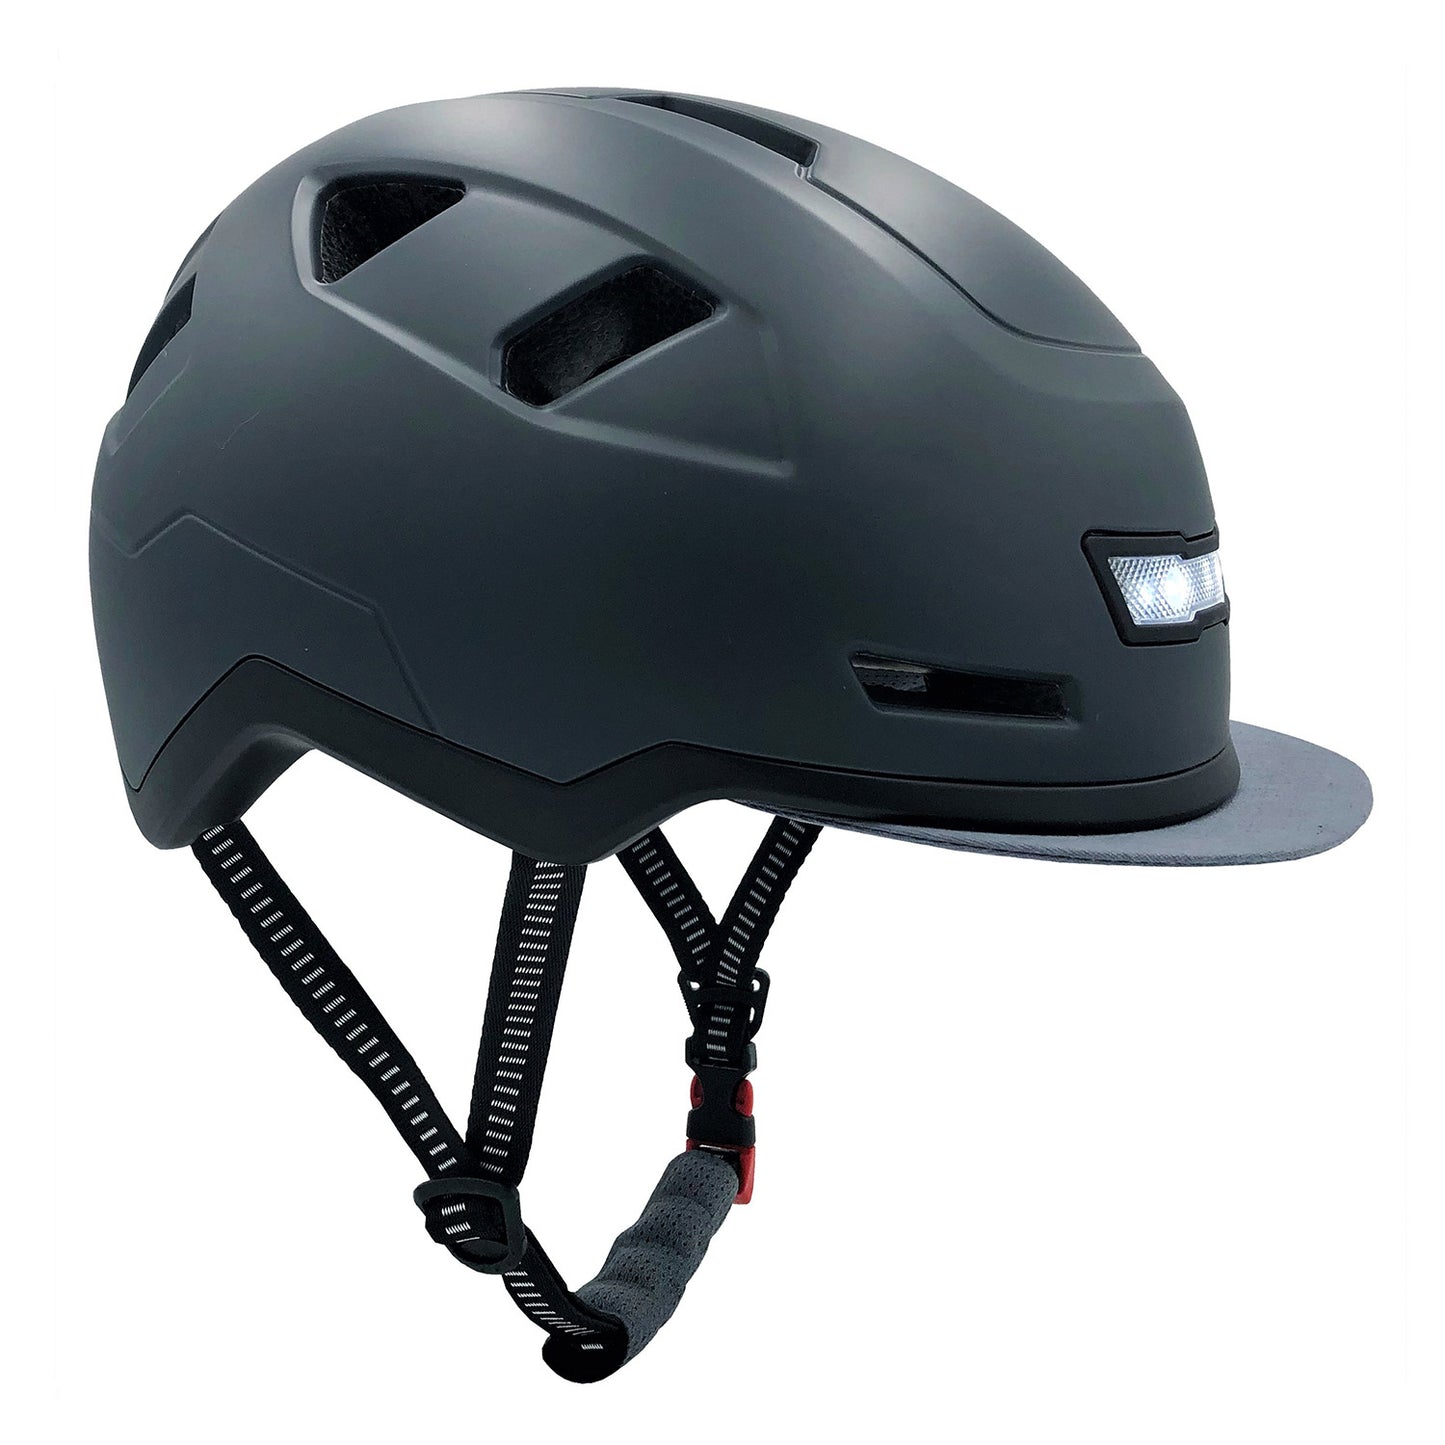 XNITO e-bike helmet with a visor, adjustable strap, and LED lights.